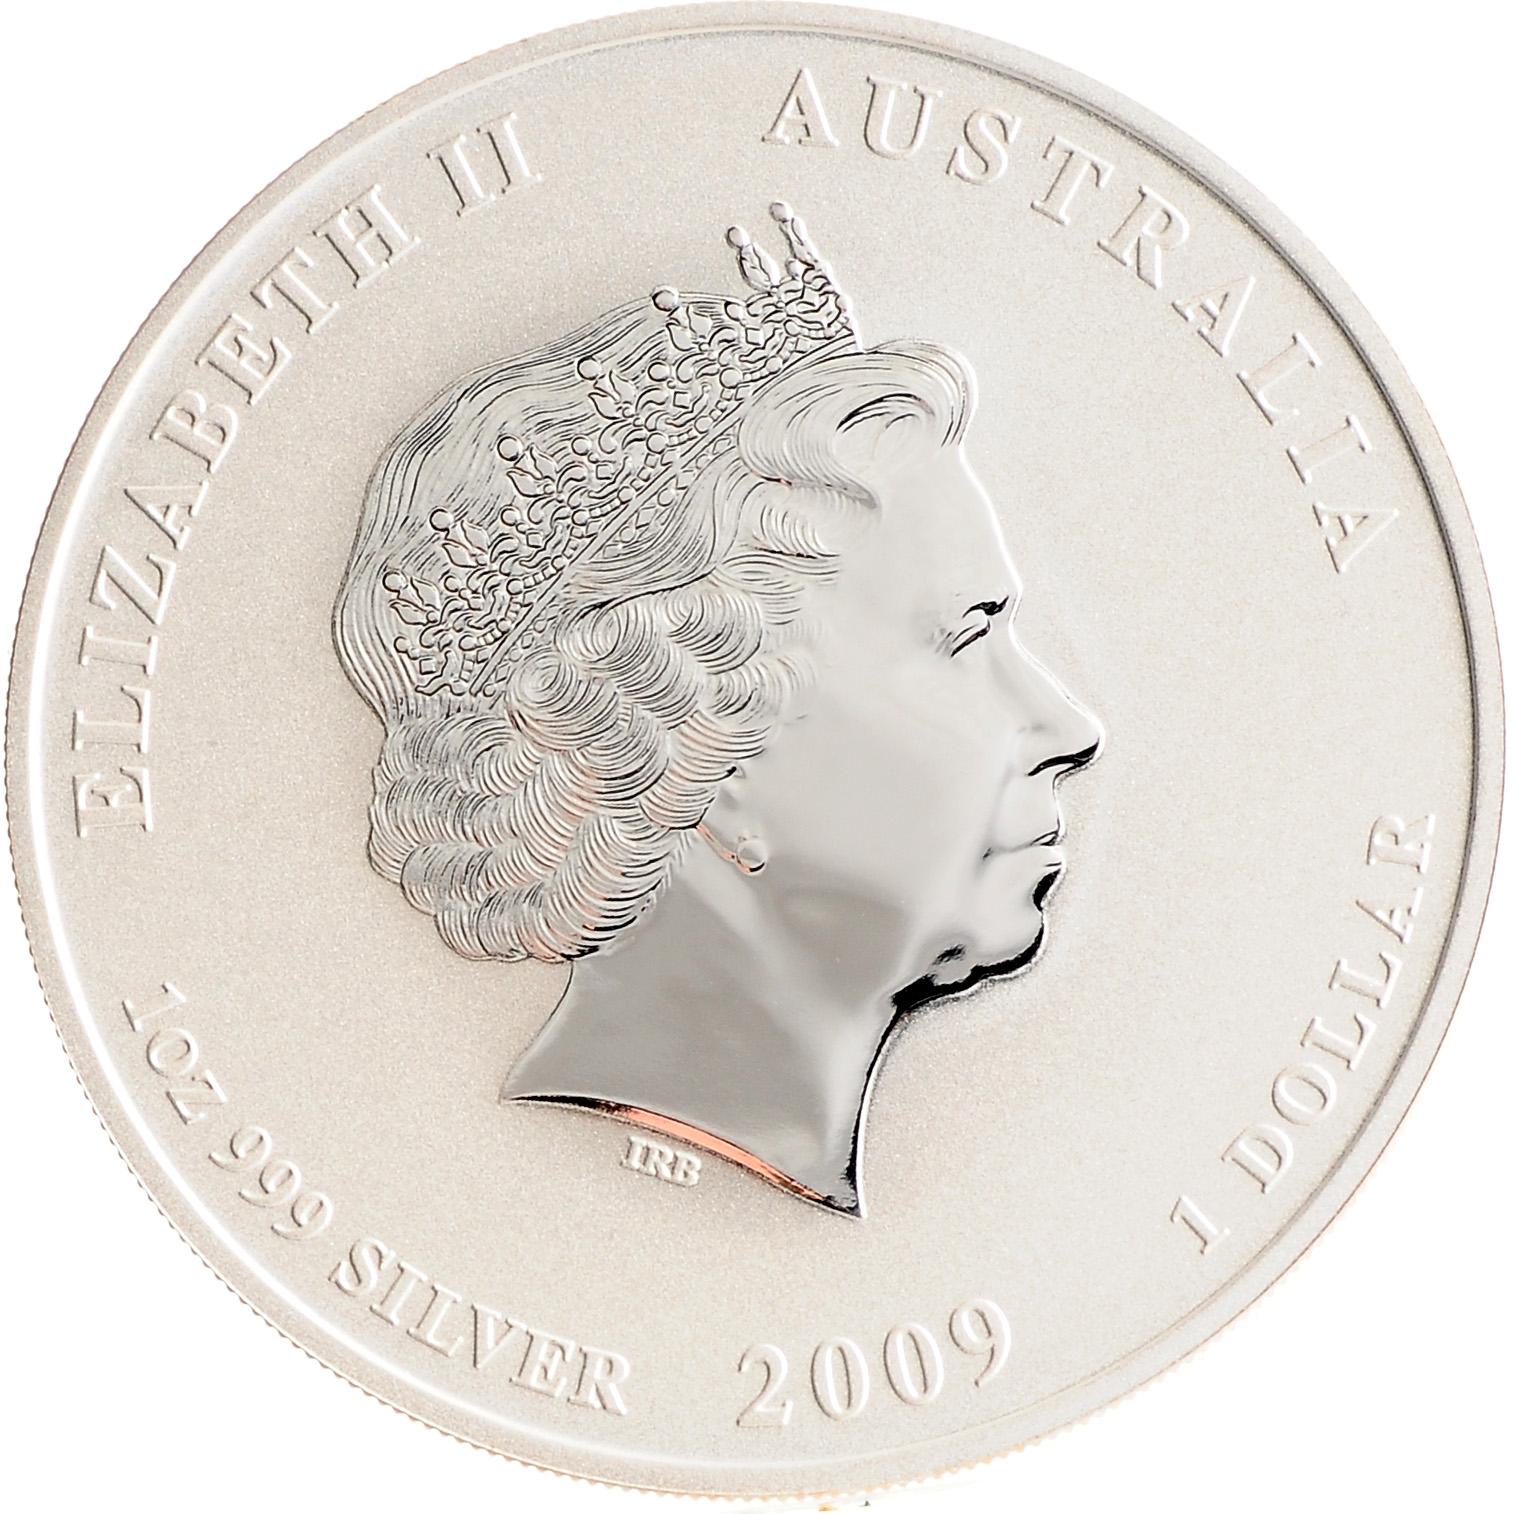 1 доллар 2009 года. Монета Elizabeth 2 Australia 1 Dollar. Серебряная монета Elizabeth Australia. Серебряные монеты Австралии парк какадуша.